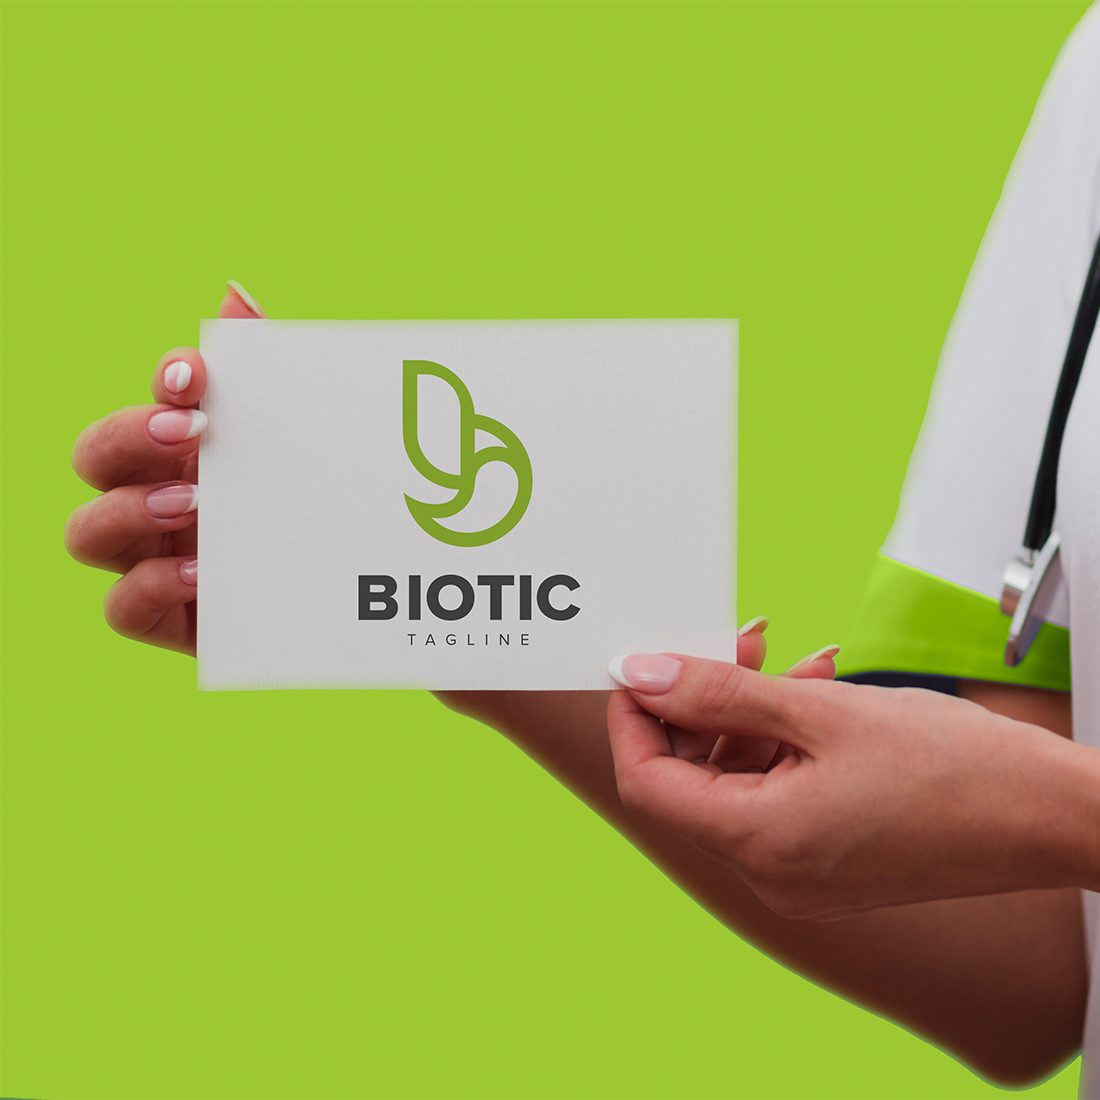 Biotic Logo cover image.